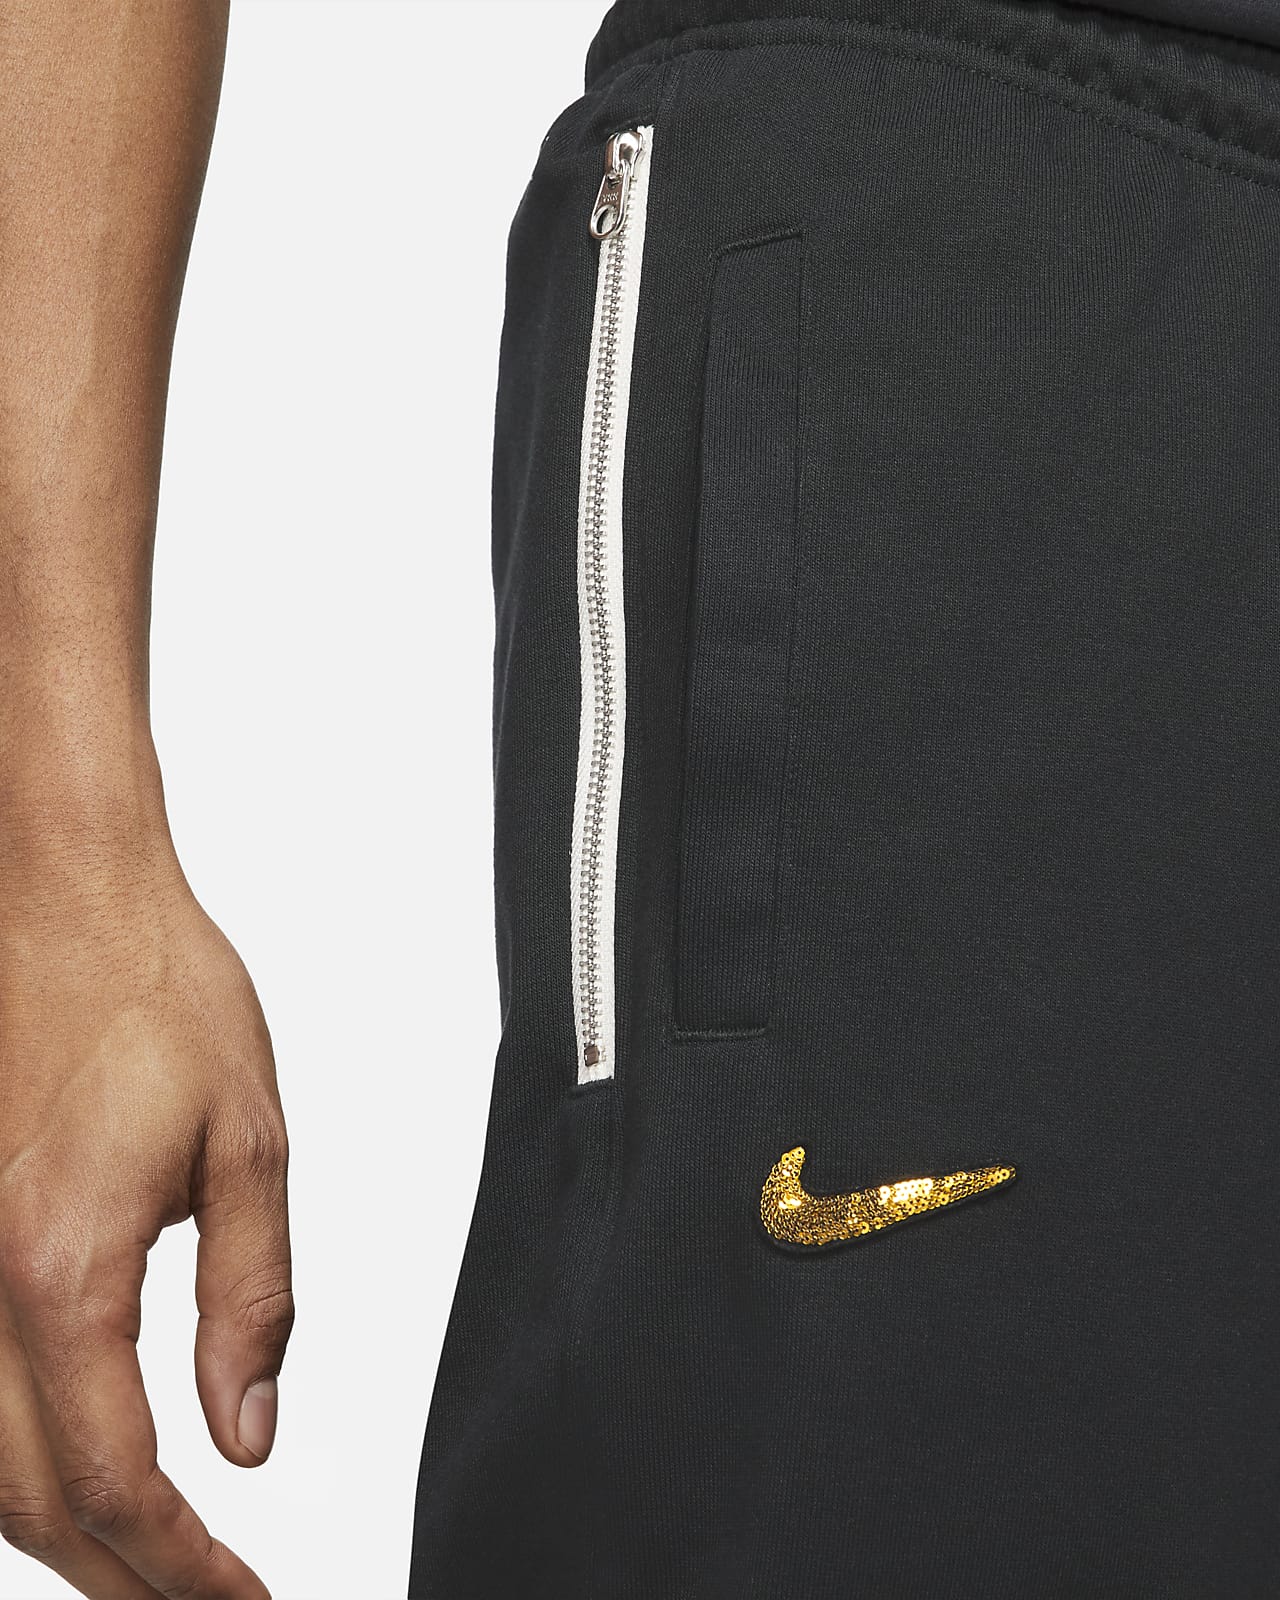 Nike Standard Issue Rayguns Men's Pants